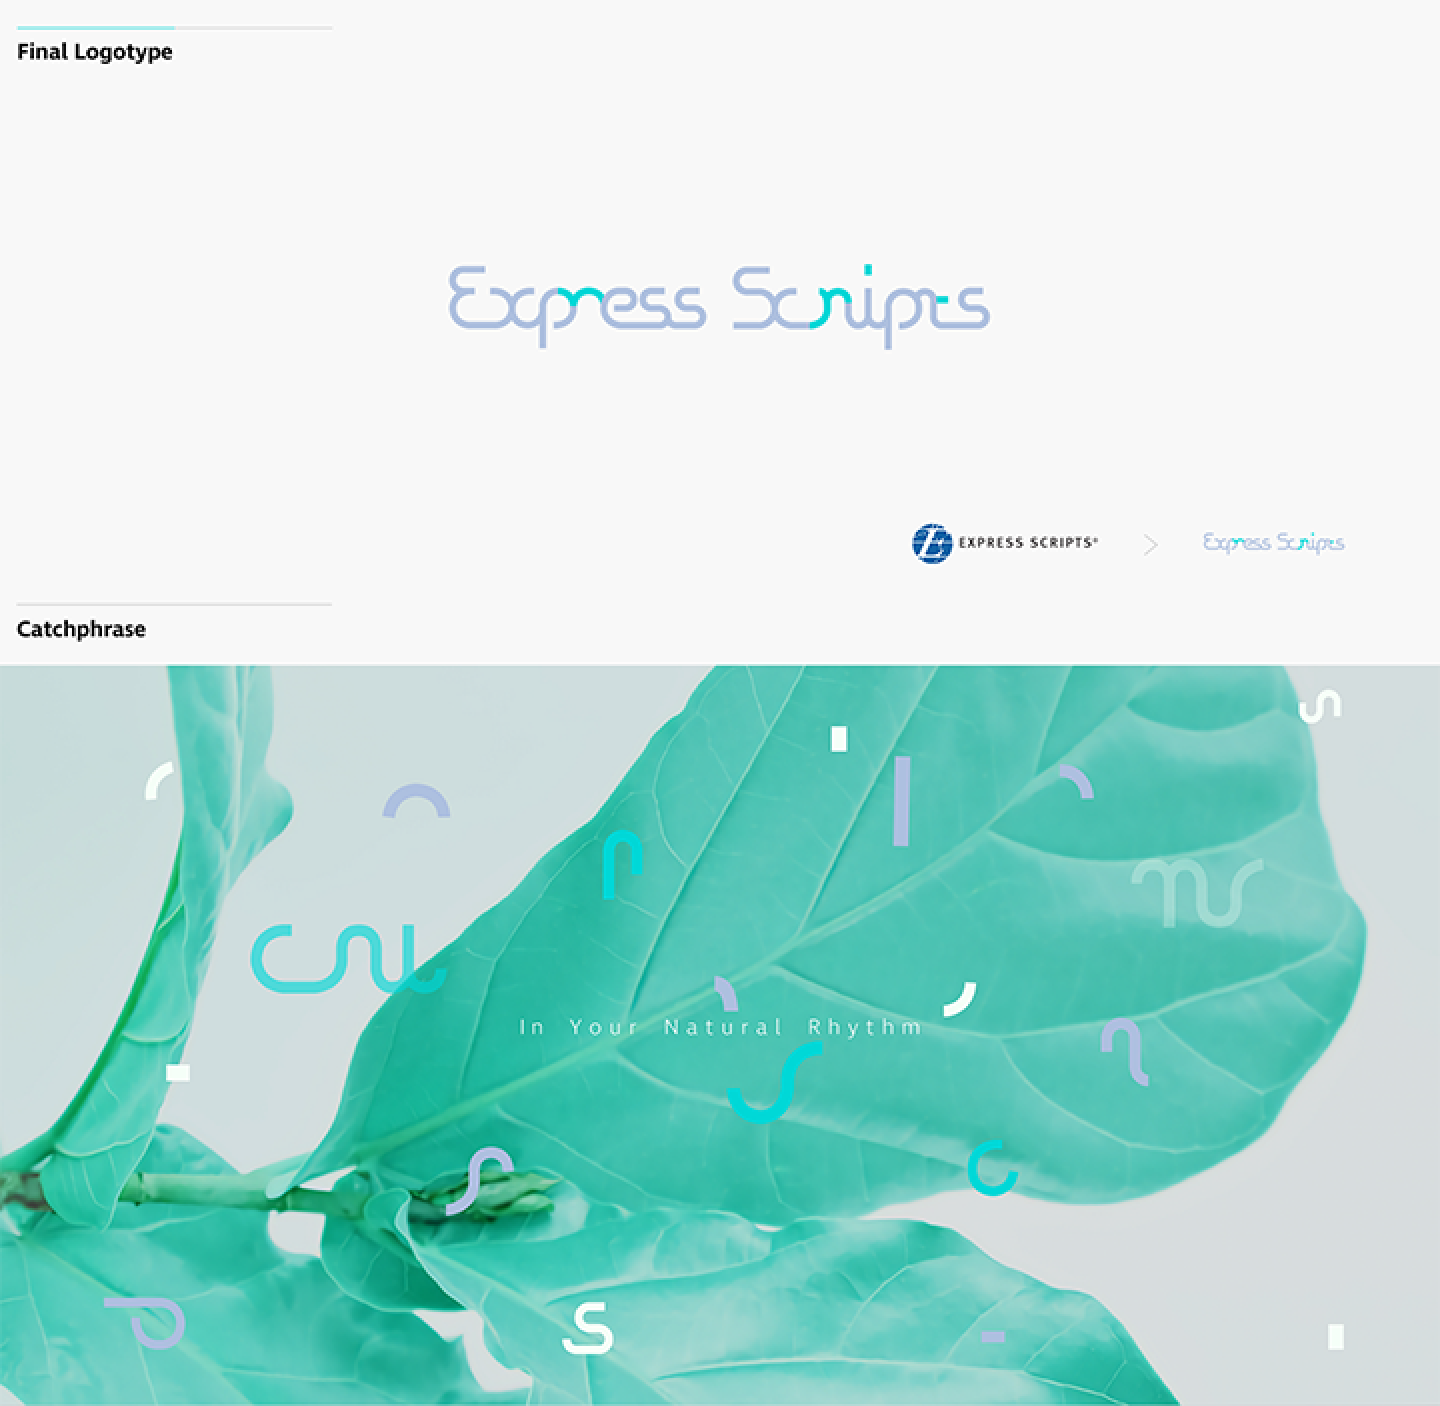 Rebranding for Express Scripts